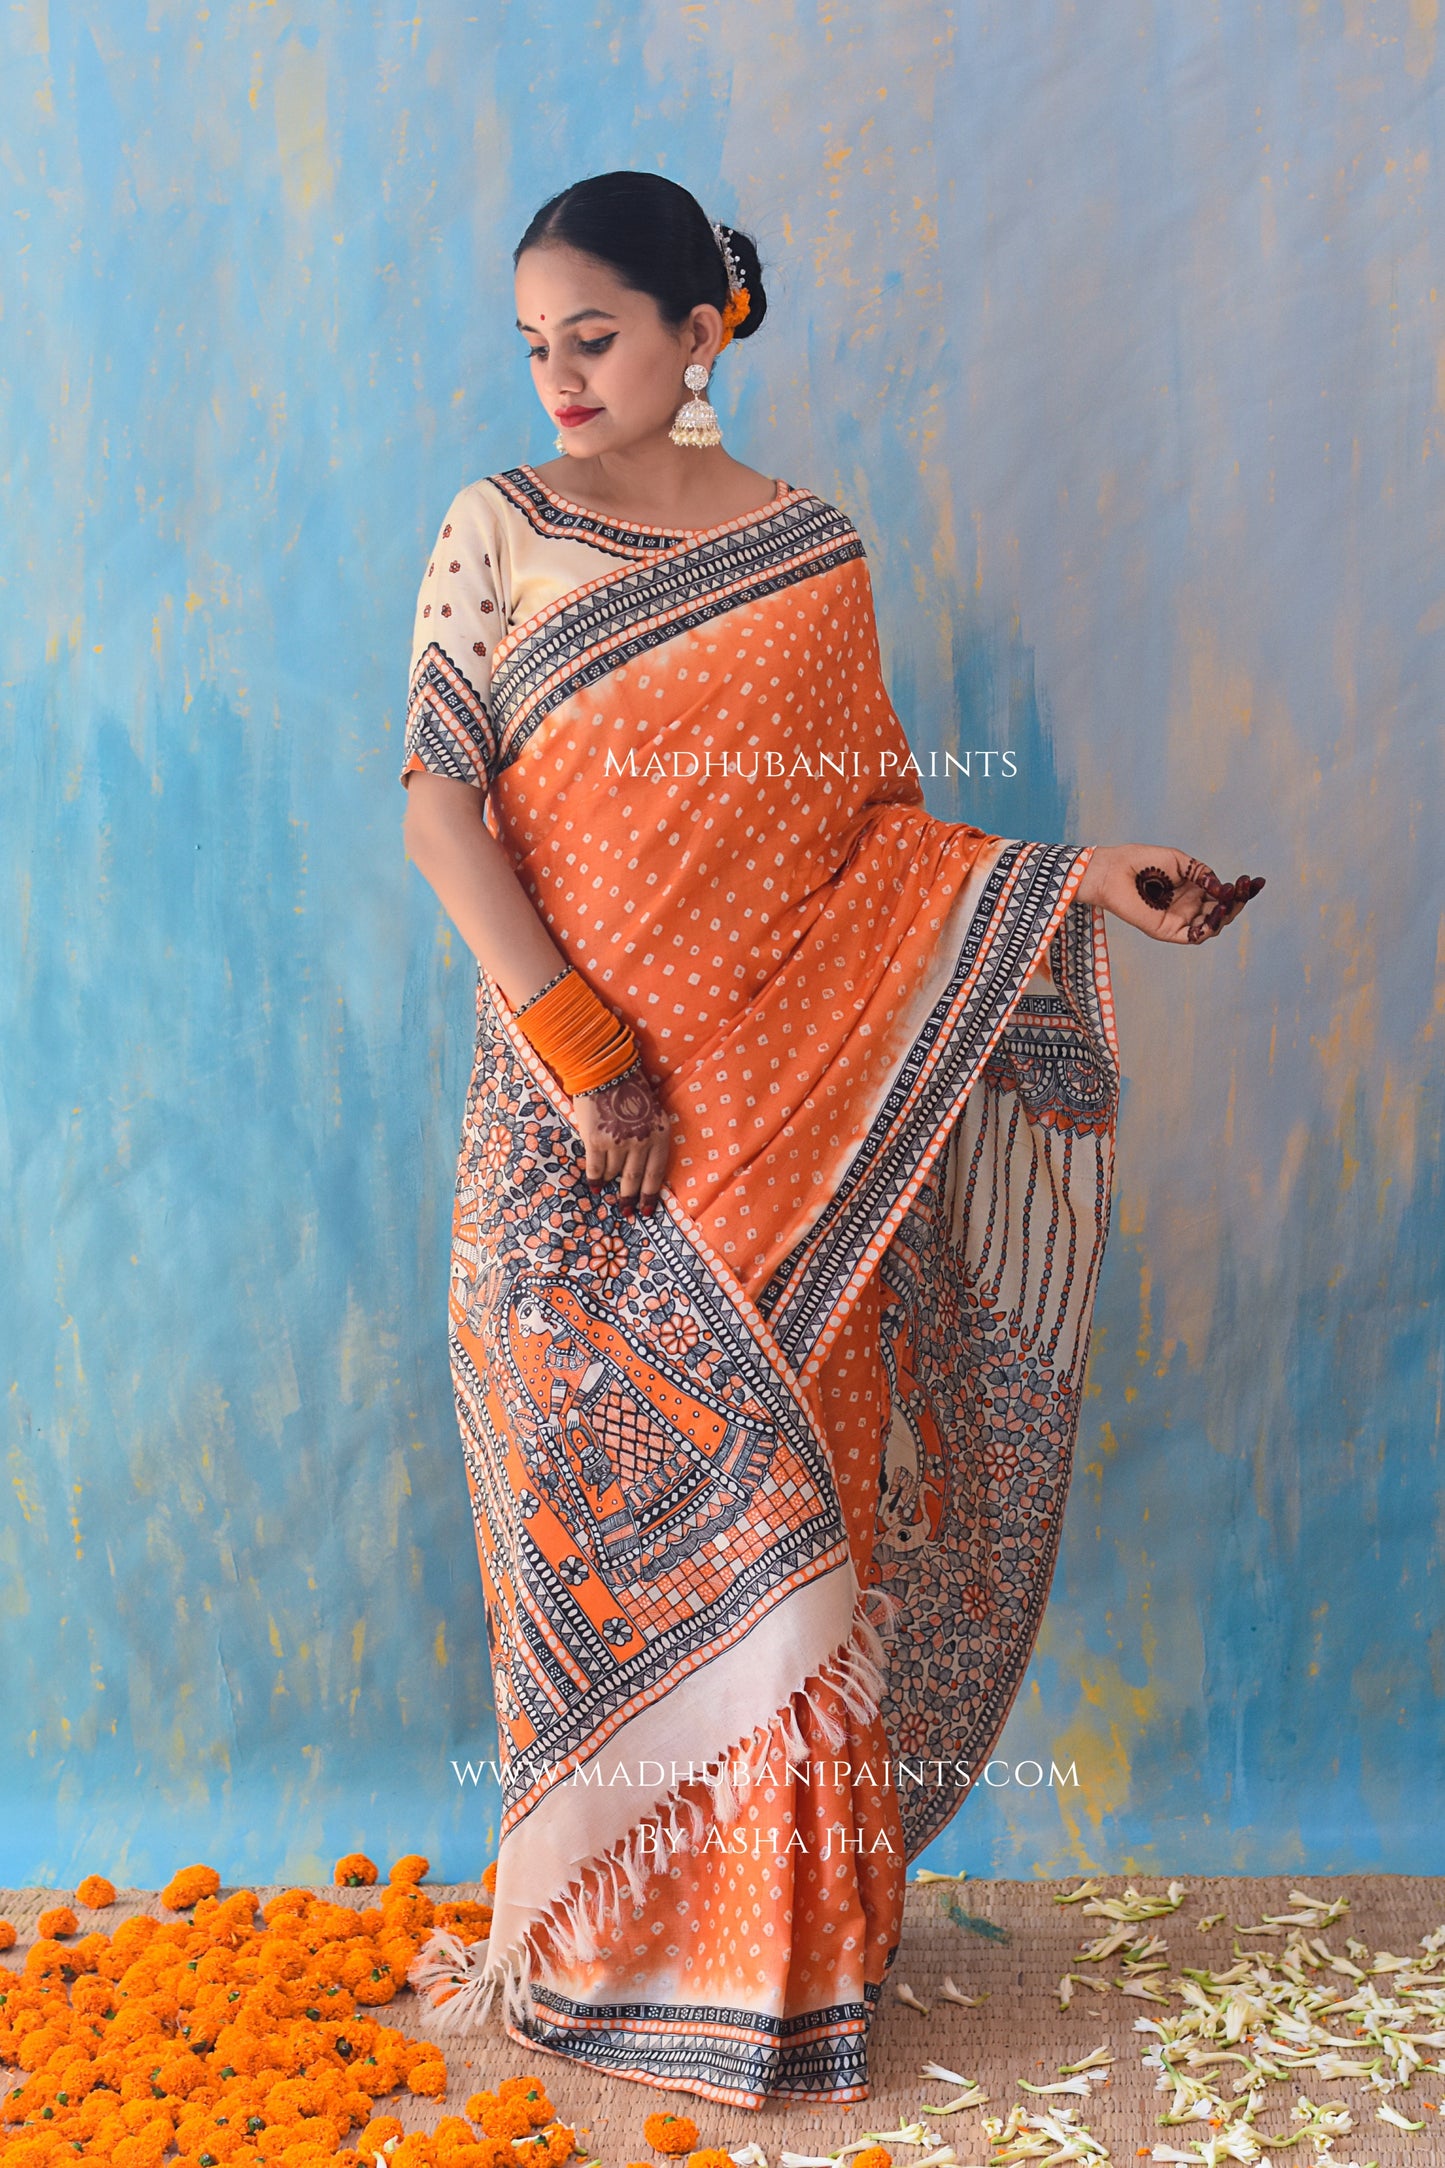 KAMLAKSHI Hand-painted Madhubani Bandhini Tussar Silk Saree Blouse Set